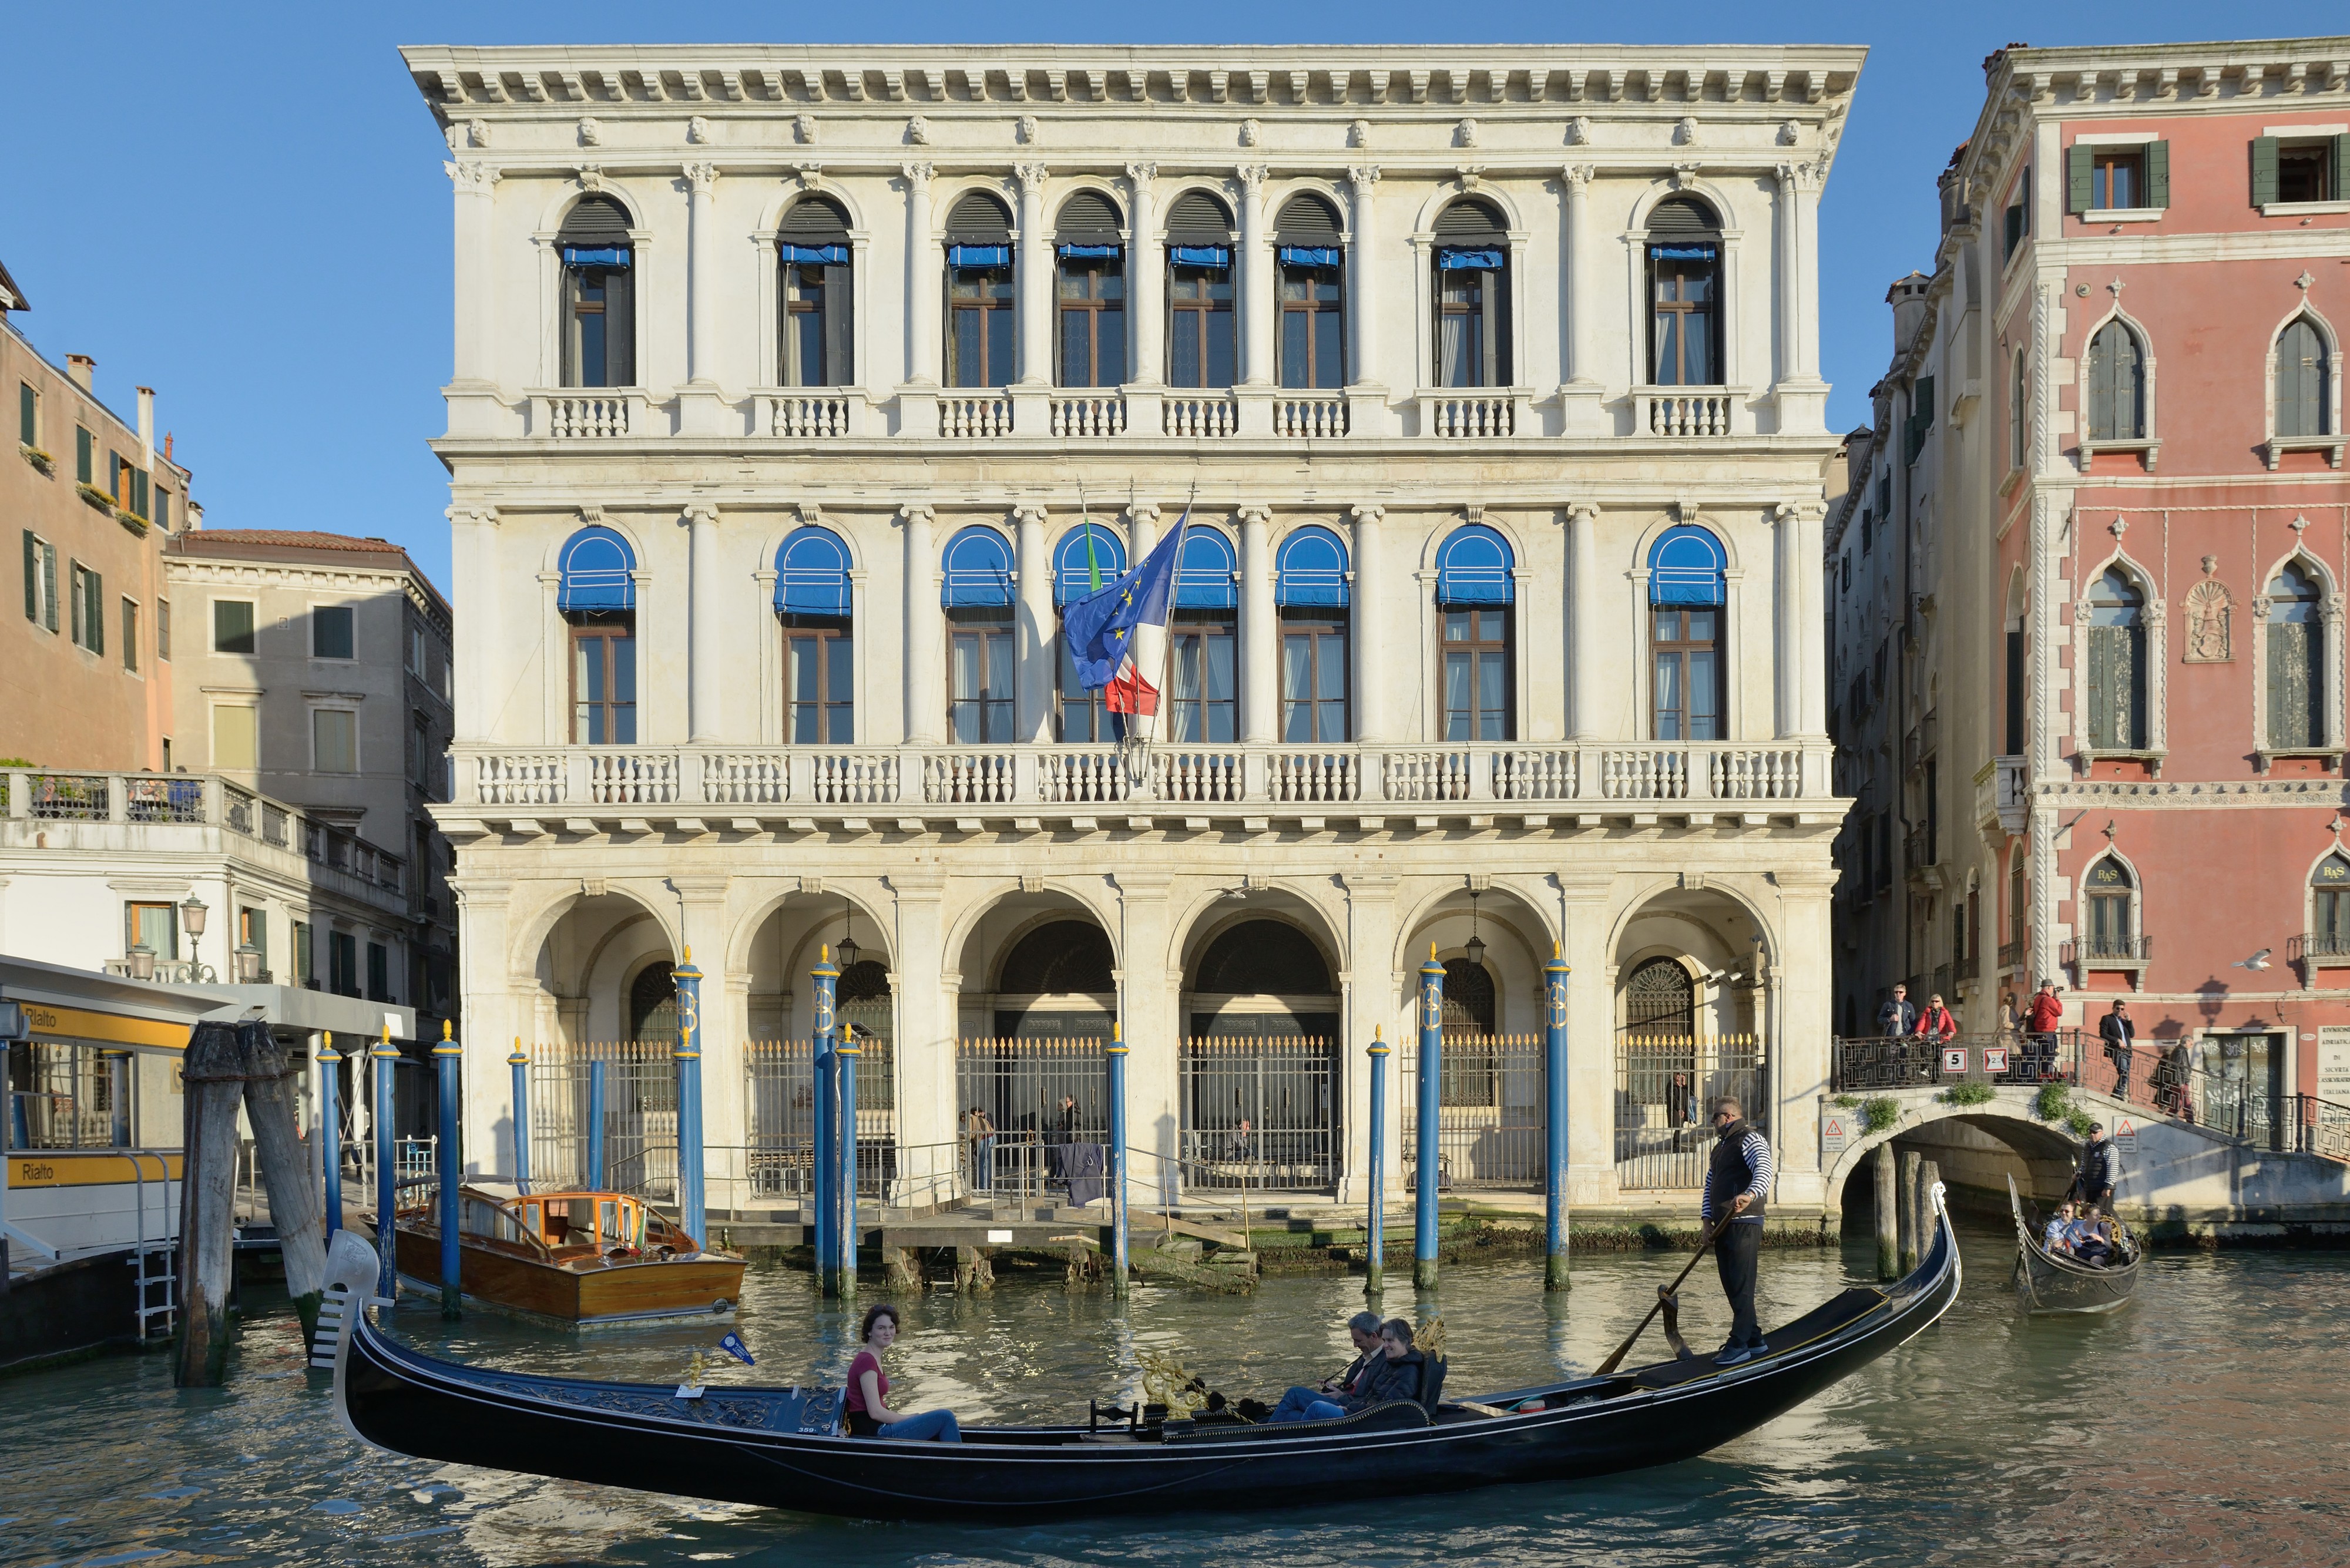 Palazzo Dolfin Manin Canal Grande Venezia